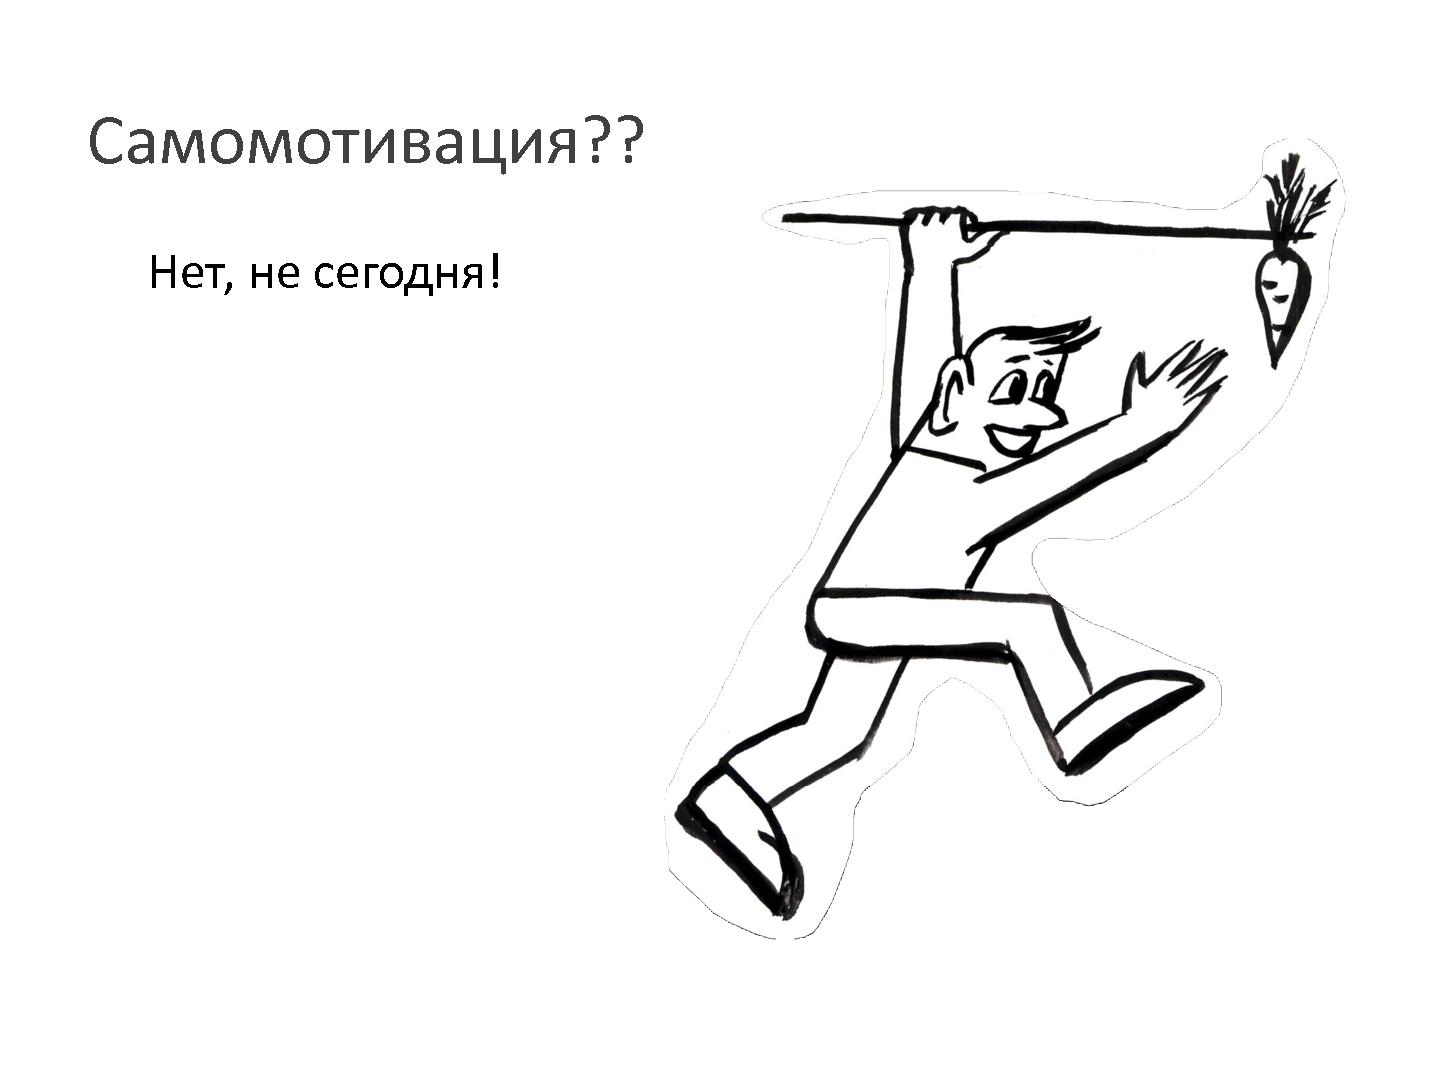 Файл:Люди середины (Владимир Железняк, SECR-2013).pdf